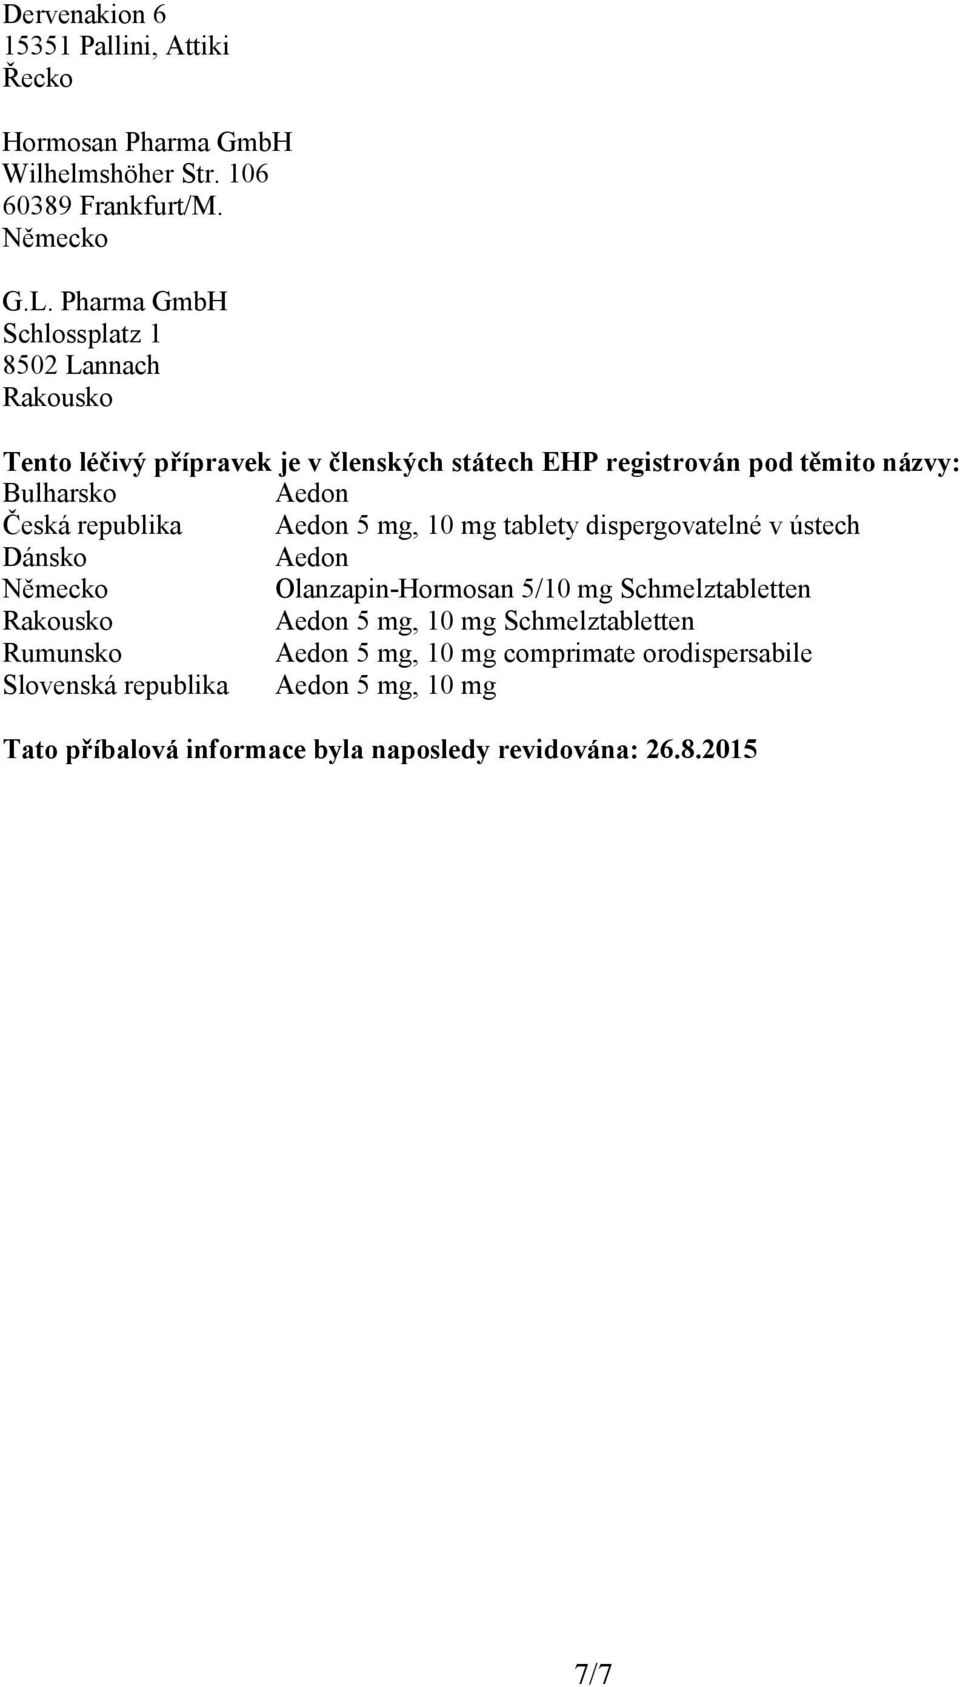 Česká republika Aedon 5 mg, 10 mg tablety dispergovatelné v ústech Dánsko Aedon Německo Olanzapin-Hormosan 5/10 mg Schmelztabletten Rakousko Aedon 5